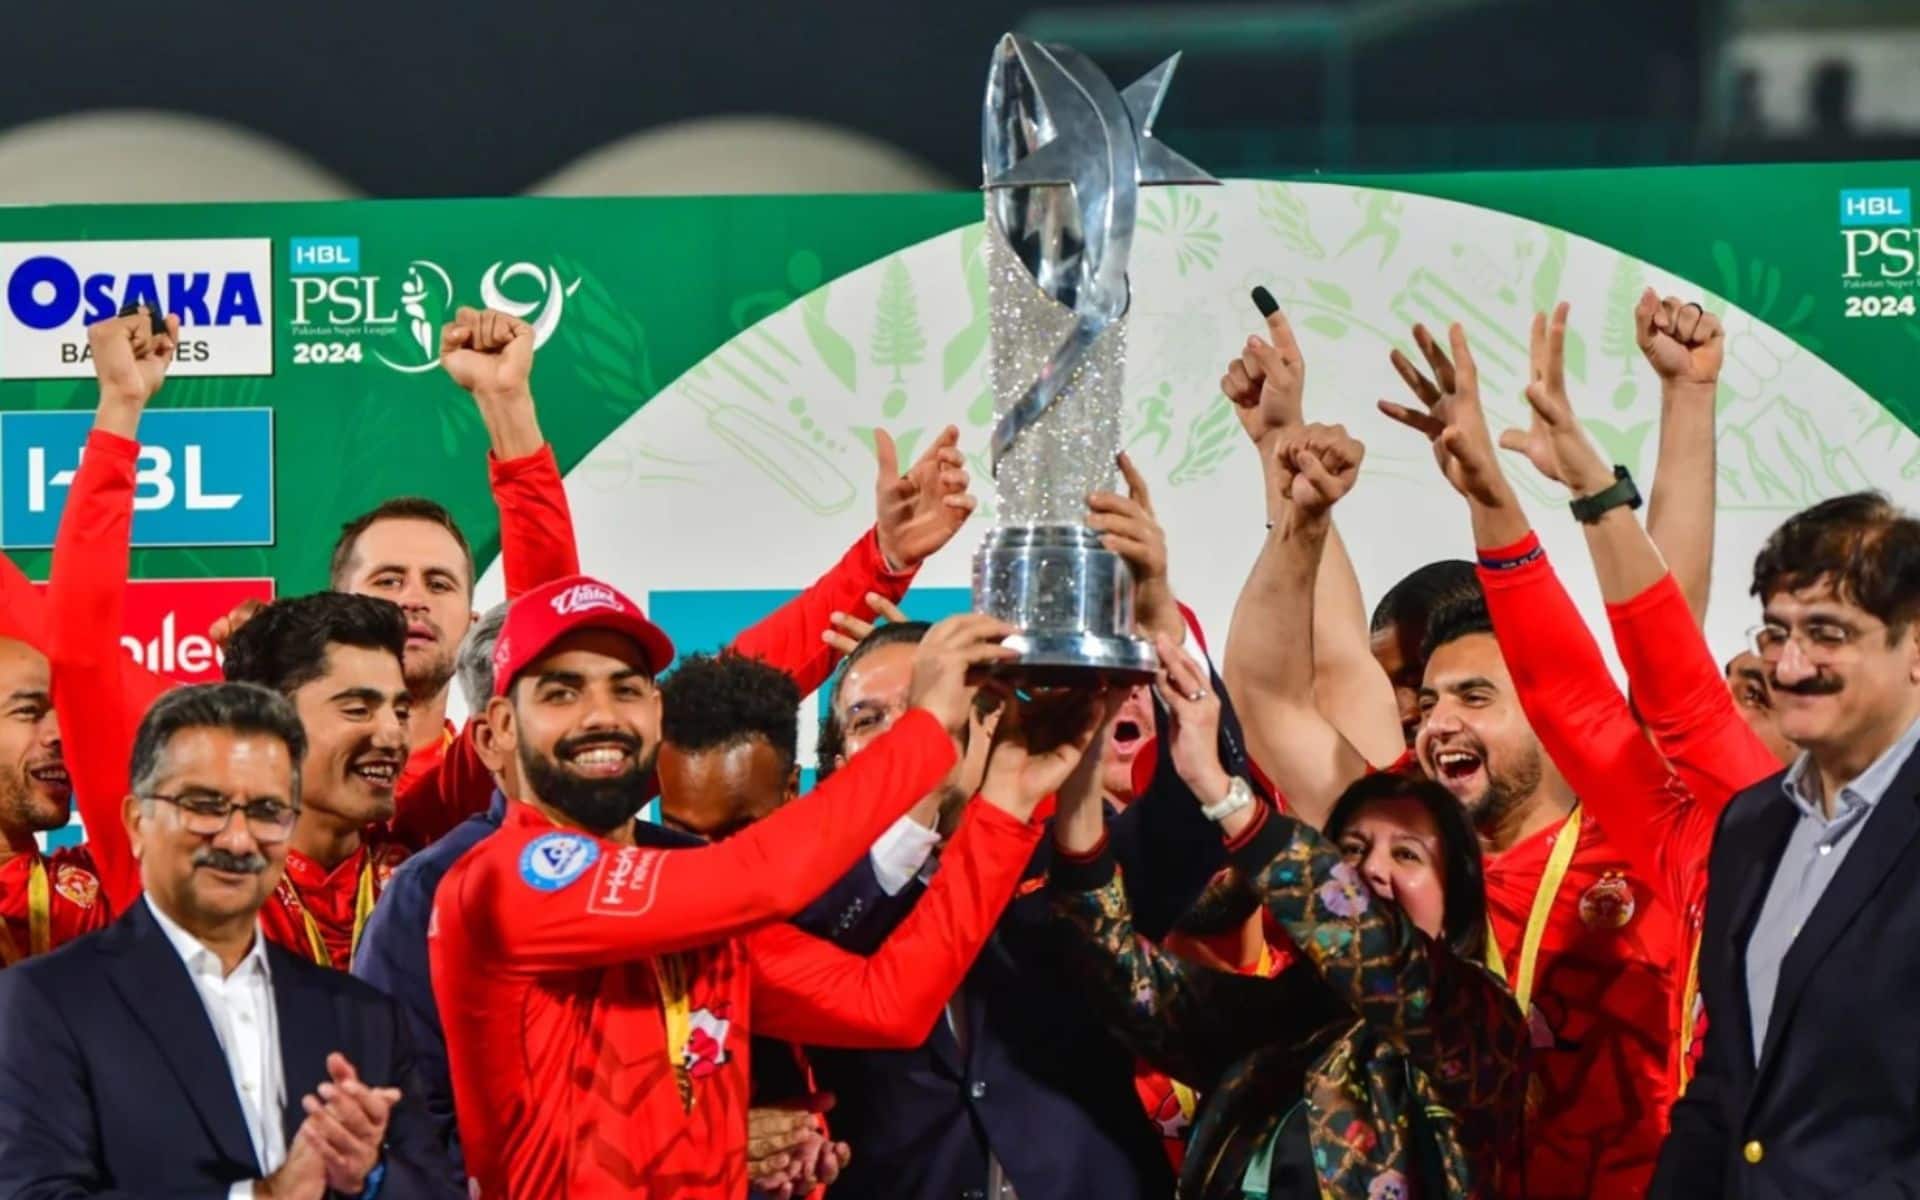 Islamabad United players celebrating PSL 2024 win in Karachi (PCB)